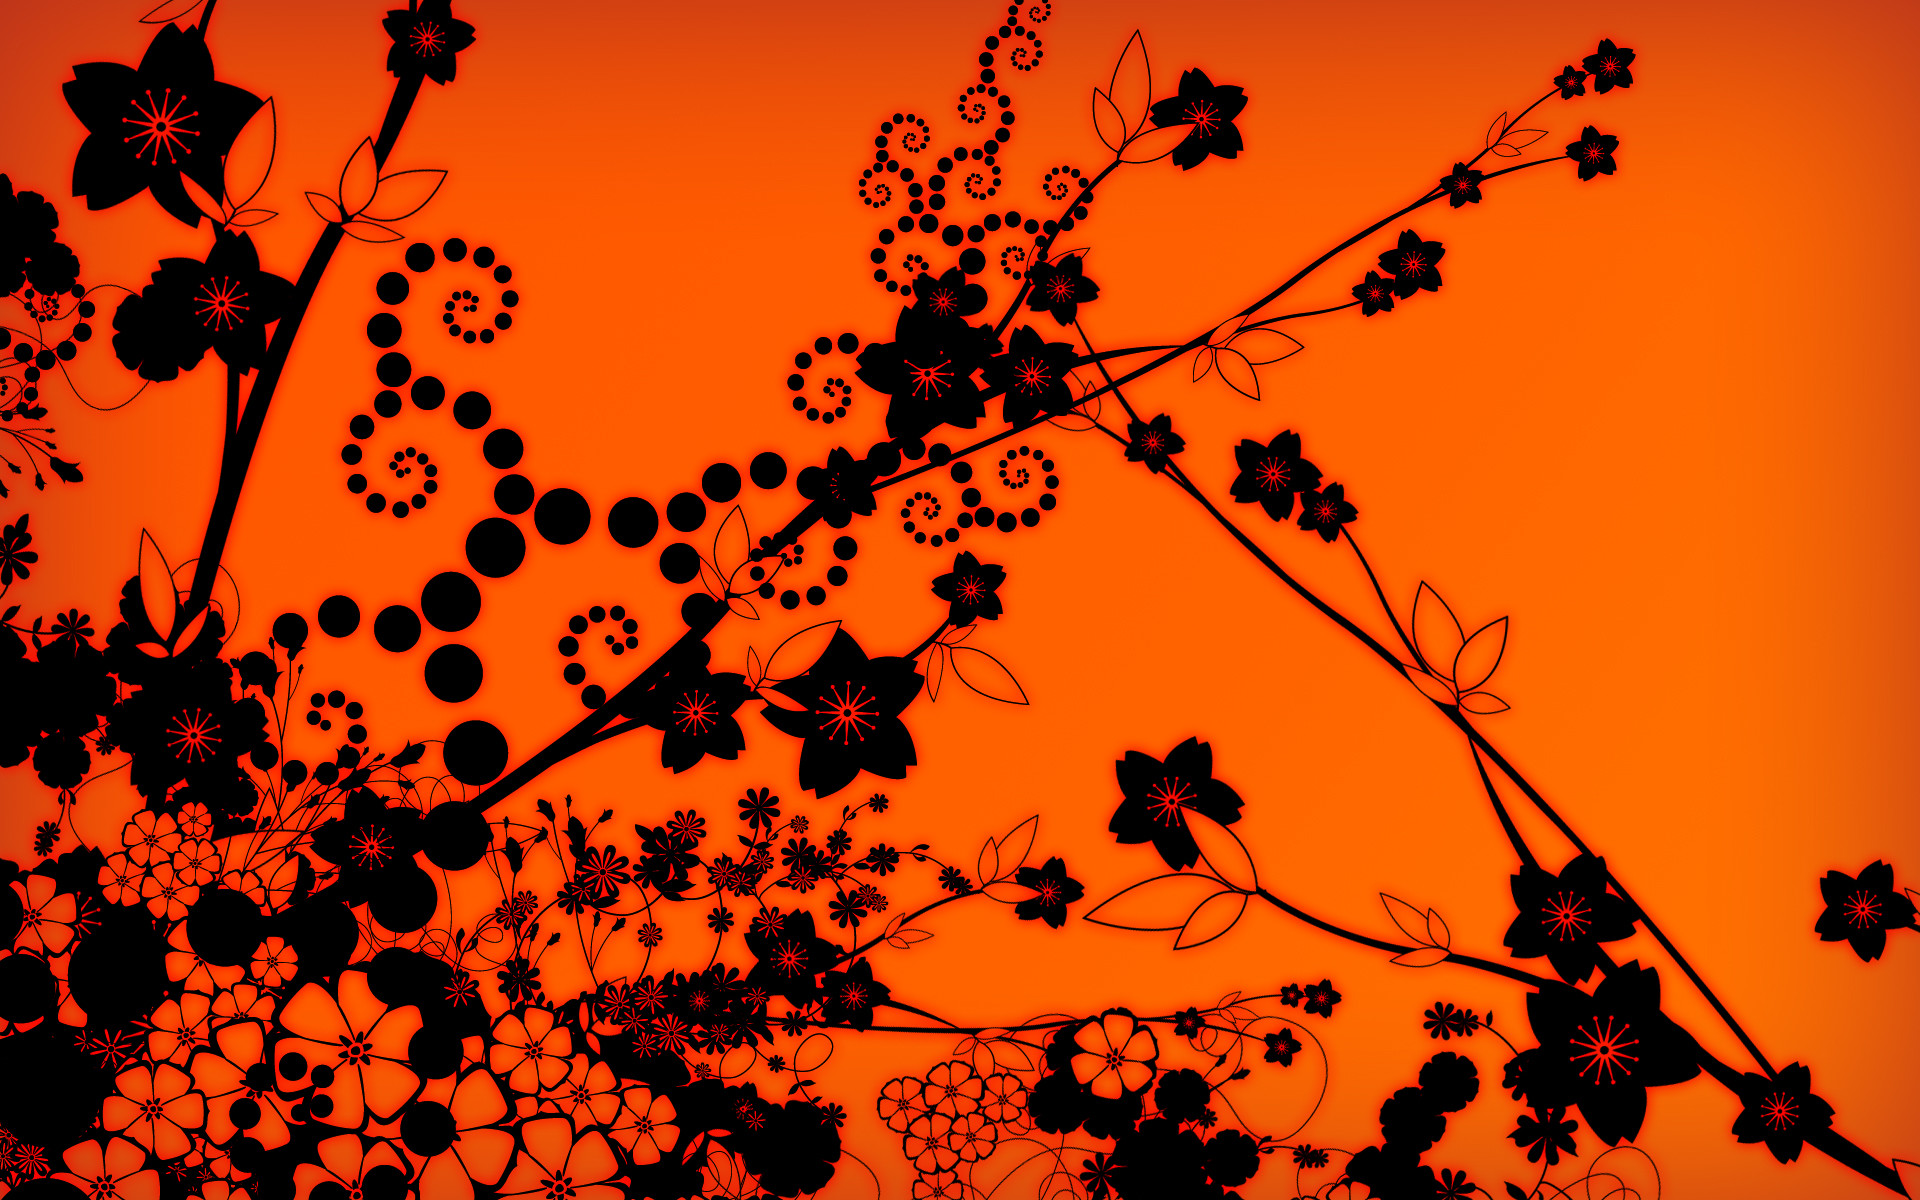 3140051 Black Orange Background Images Stock Photos  Vectors   Shutterstock